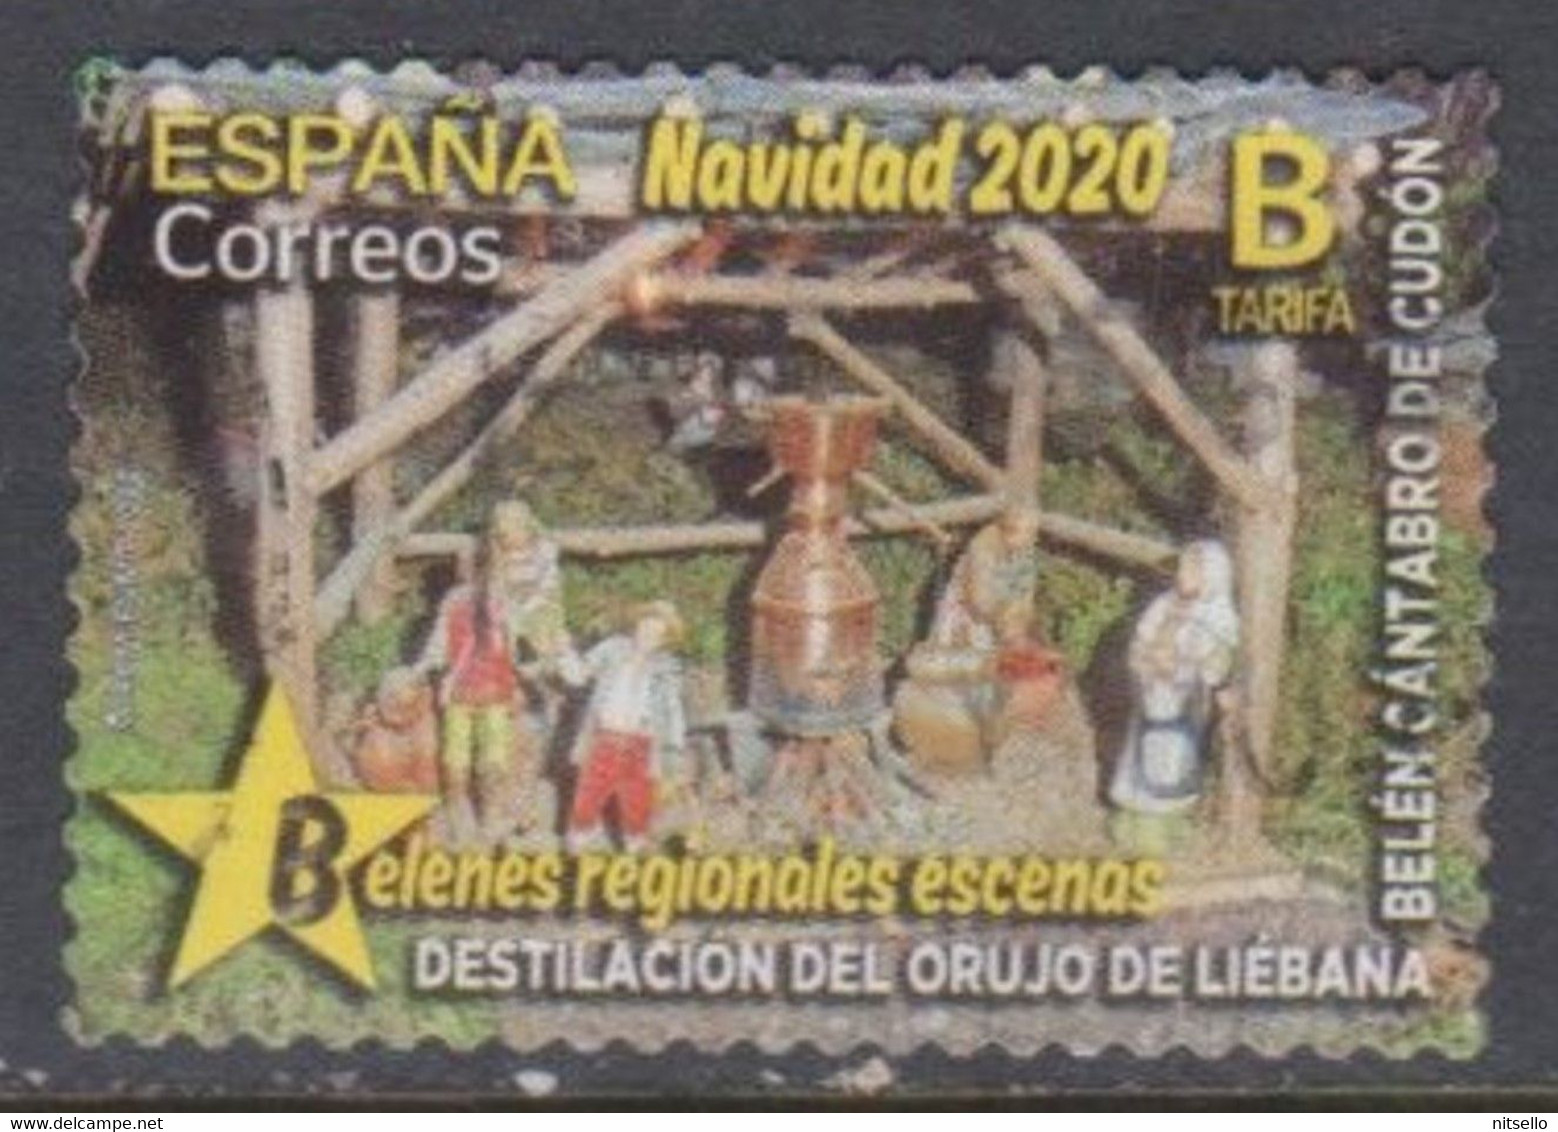 LOTE 2226 /// ESPAÑA 2020 NAVIDAD  ¡¡¡ OFERTA - LIQUIDATION !!! JE LIQUIDE !!! - Used Stamps